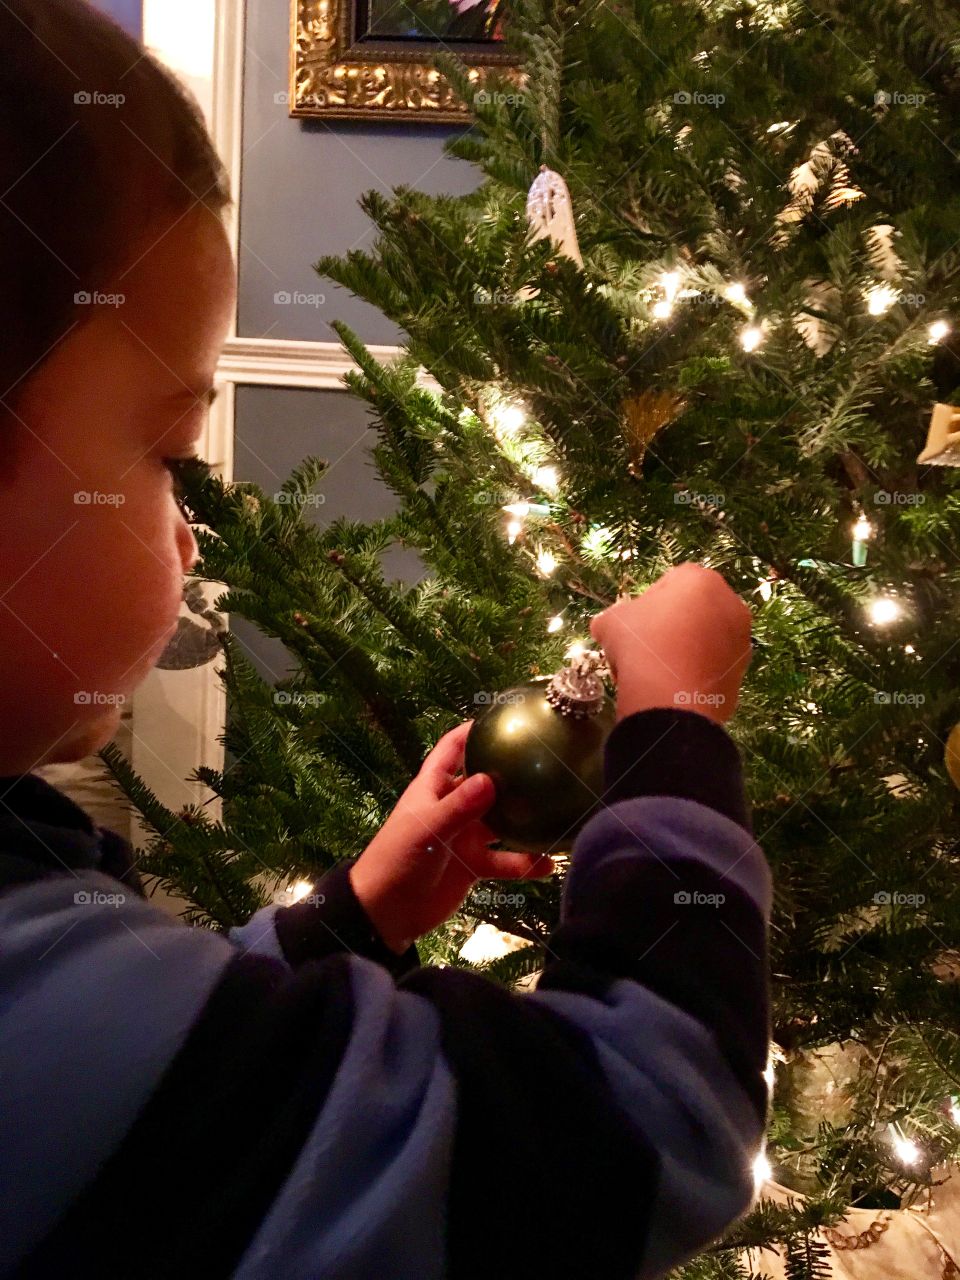 Decorating the Christmas tree 